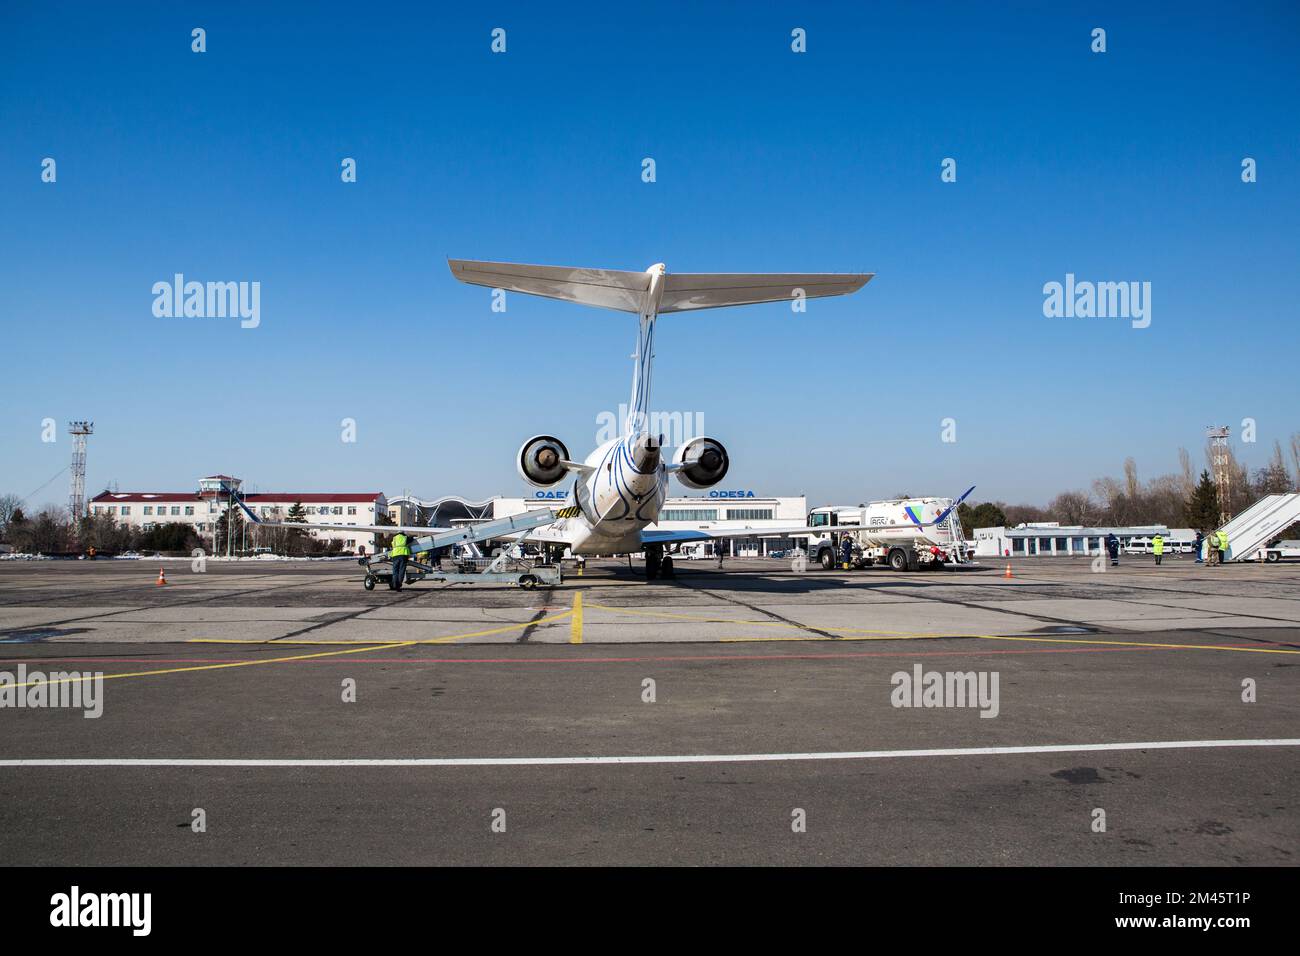 Odessa, Ukraine SIRCA 2018: Passanger white plane LOT. Airplane on the platform of Airport. Stock Photo